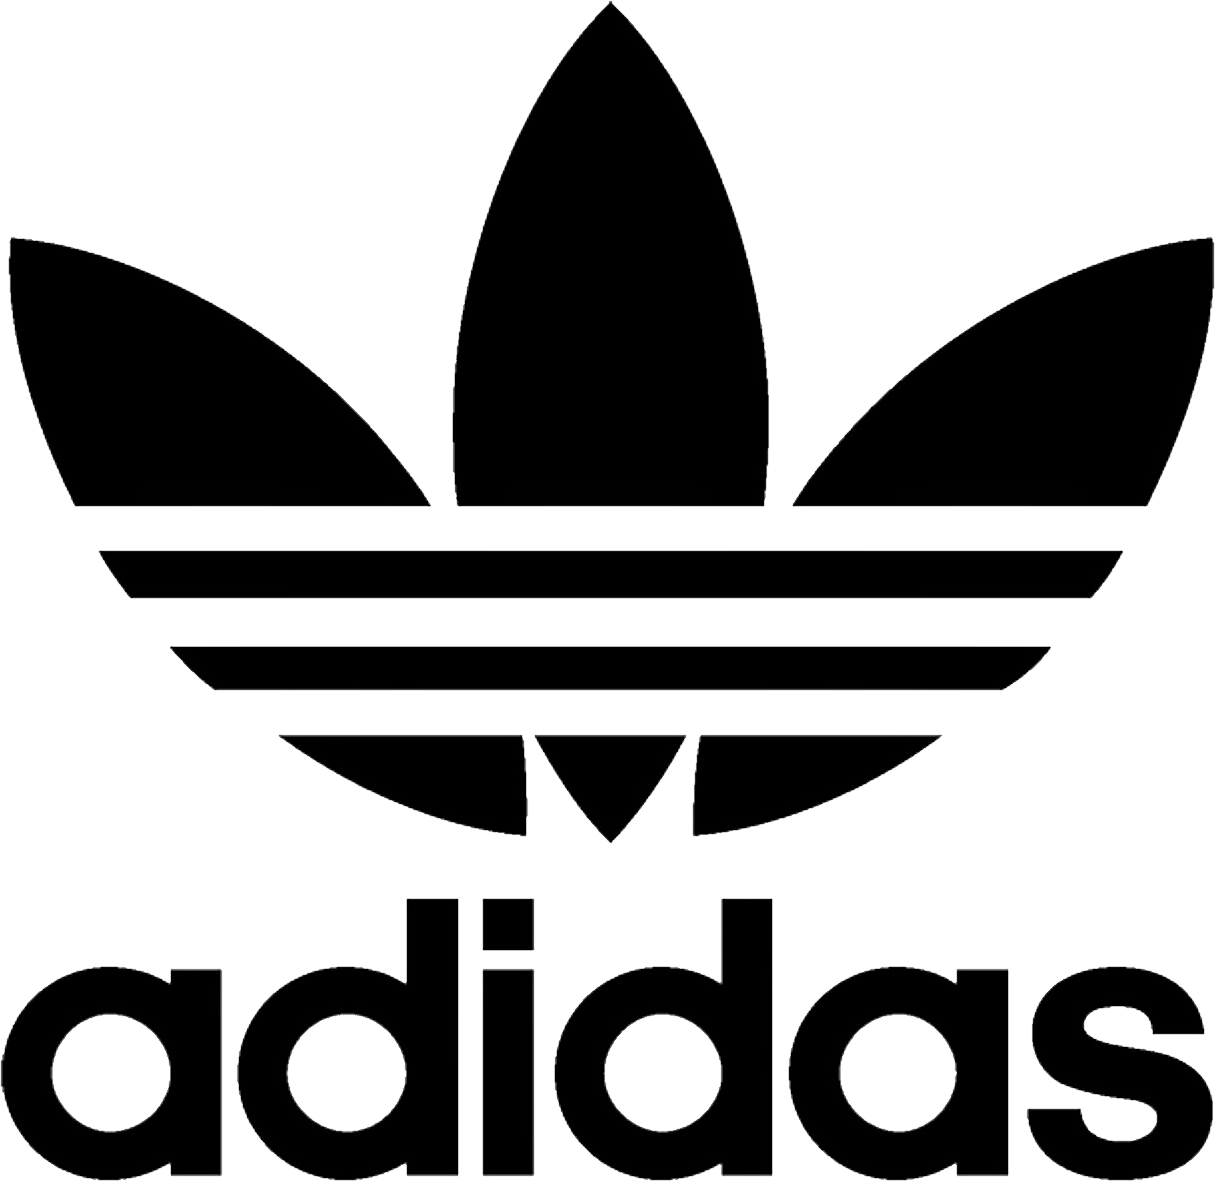 Adidas logosu